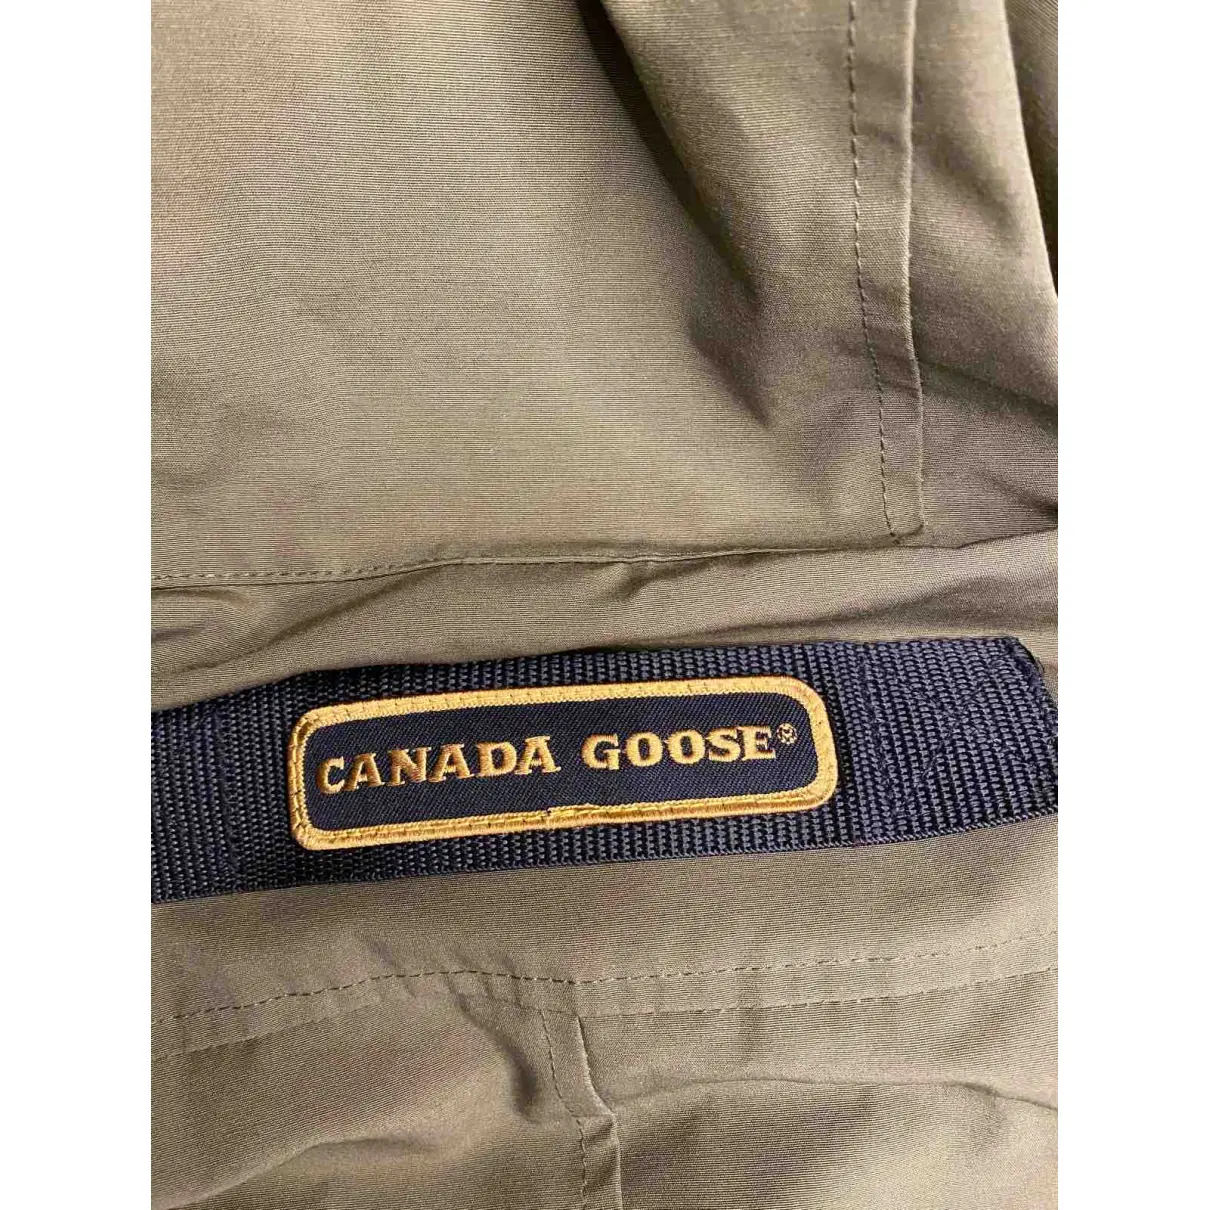 Buy Canada Goose Green Polyester Coat online